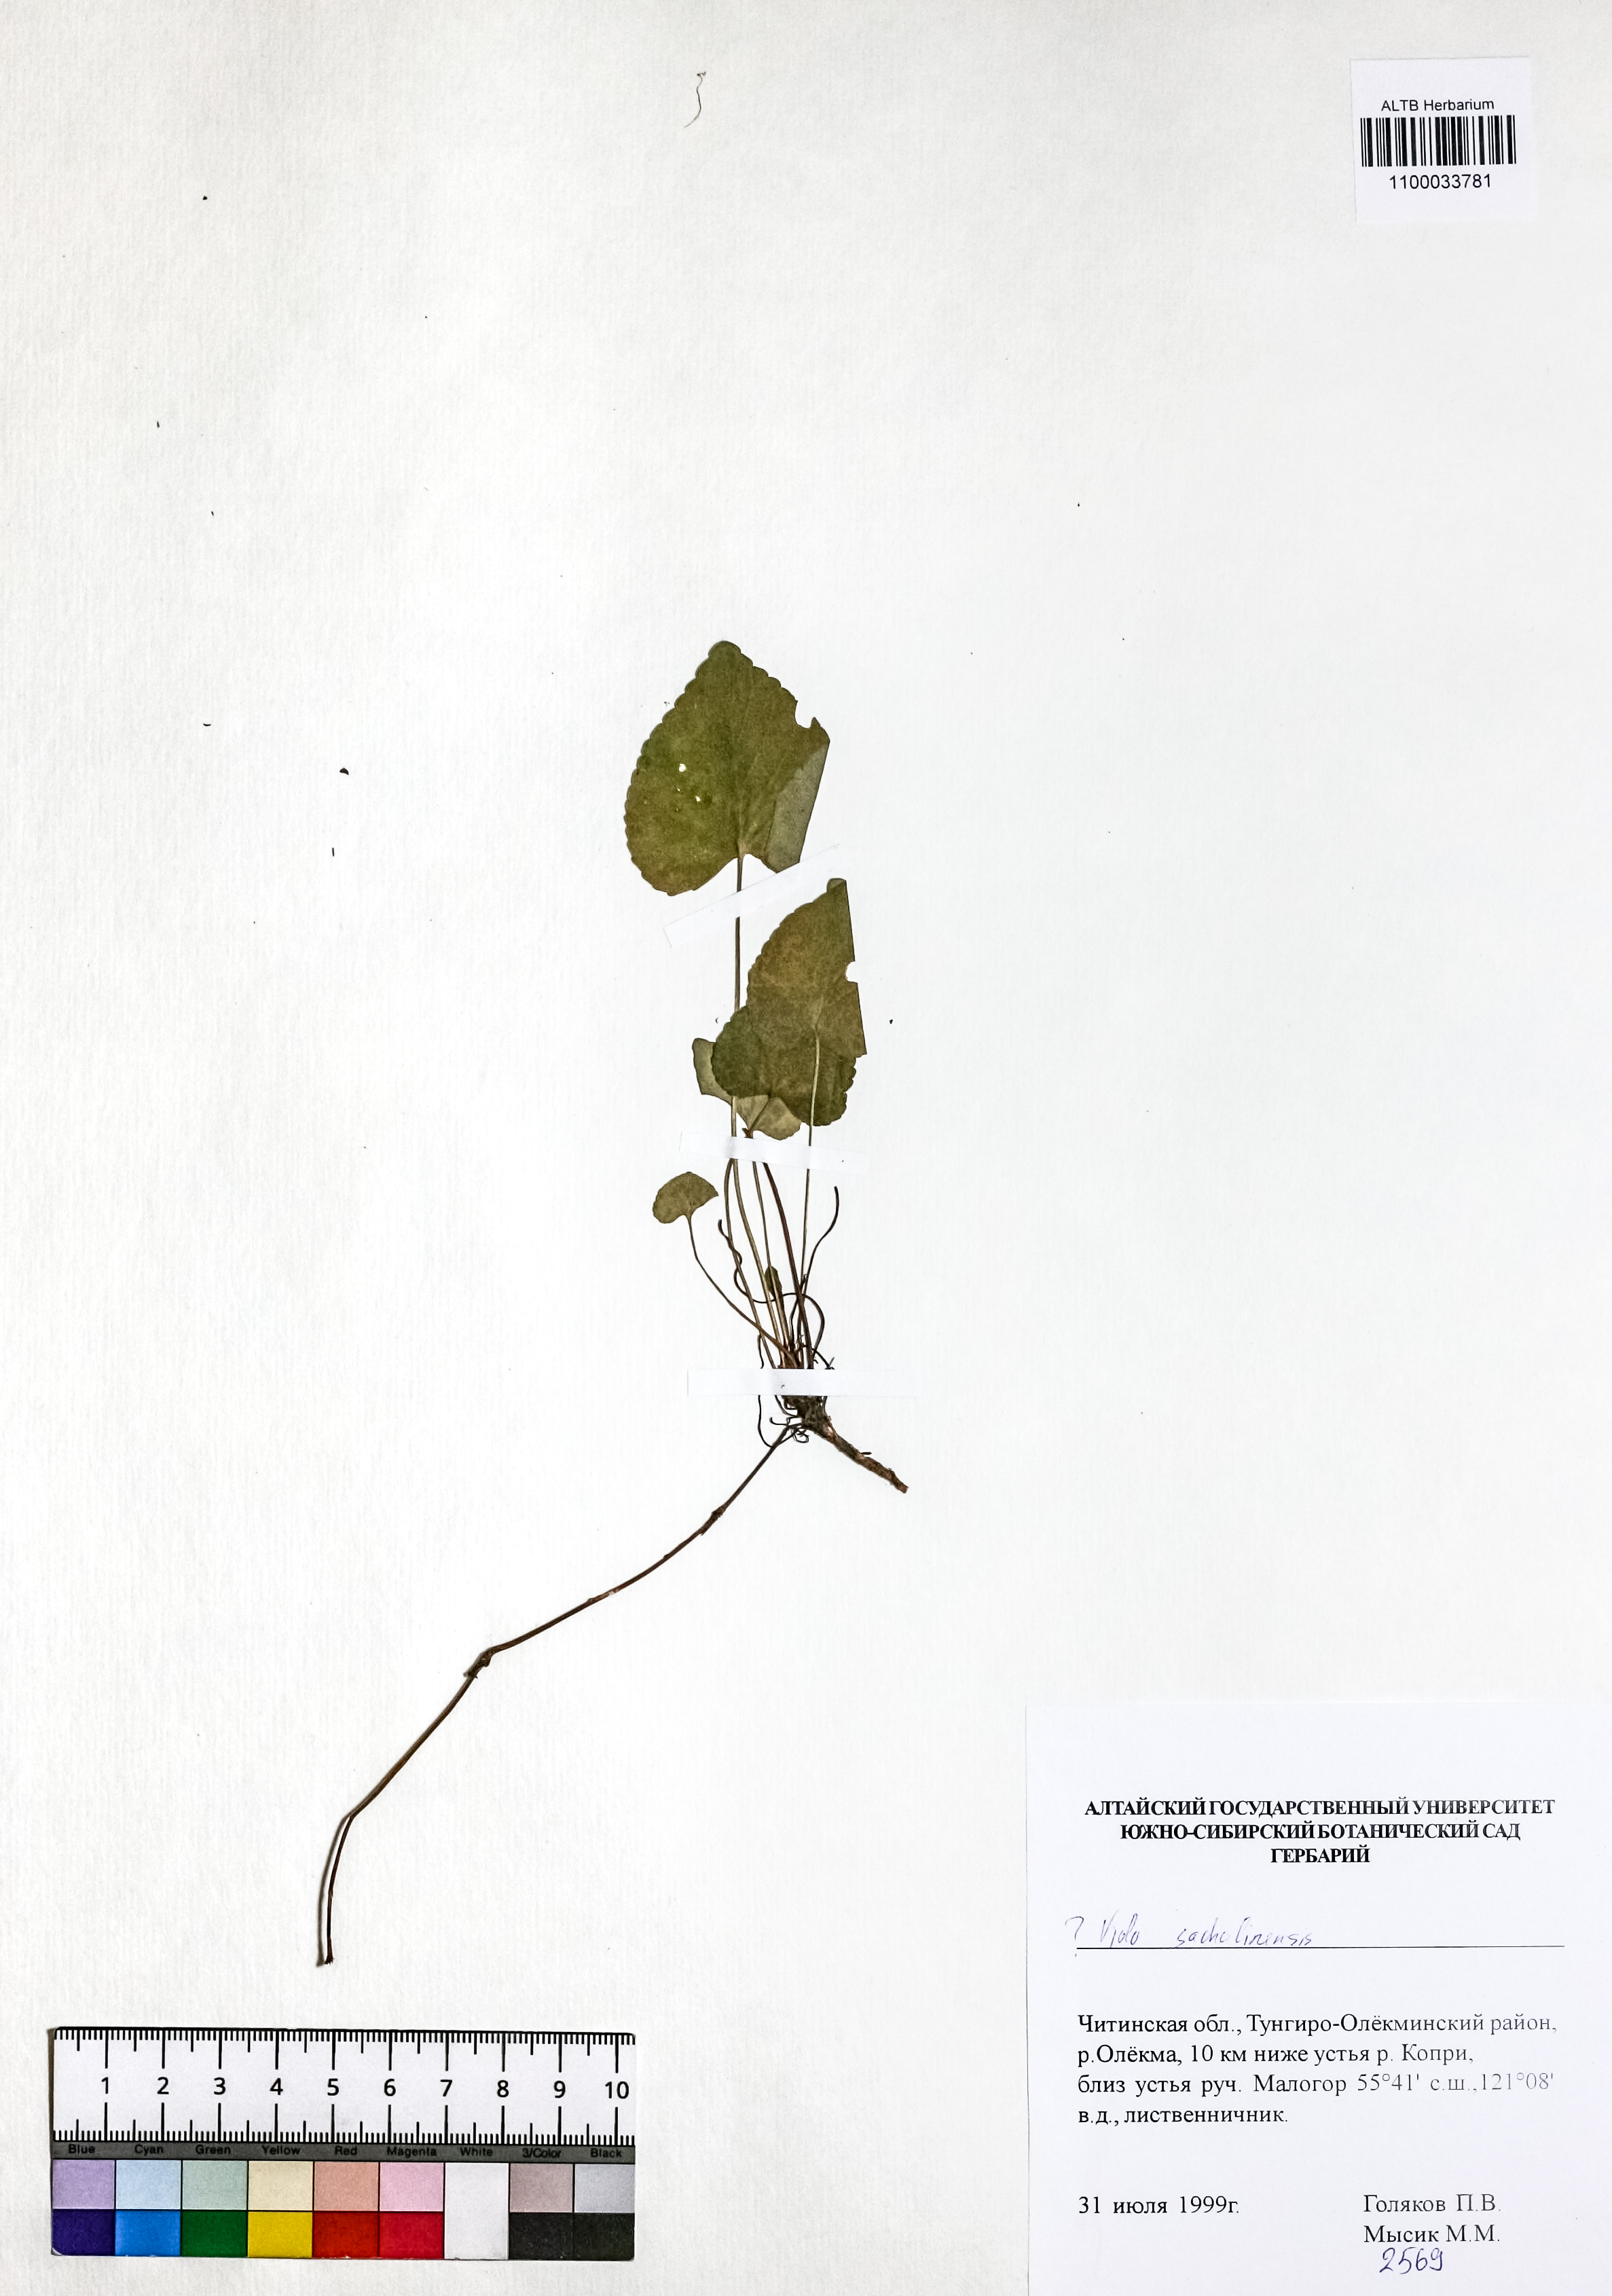 Viola sacchalinensis H.Boissieu